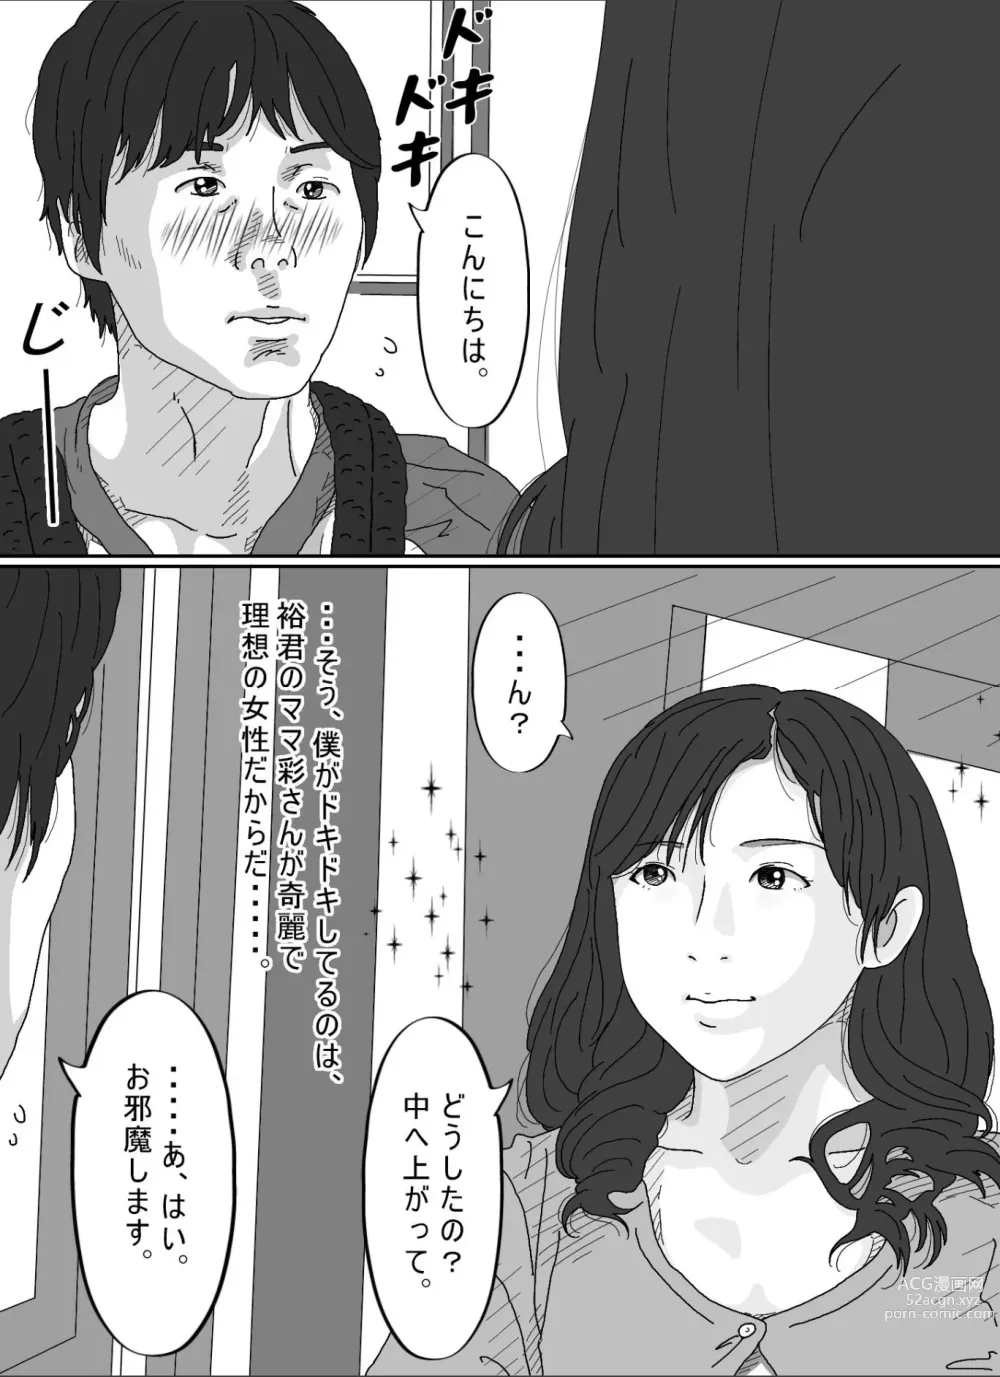 Page 4 of doujinshi Tomodachi no Okaa-san.